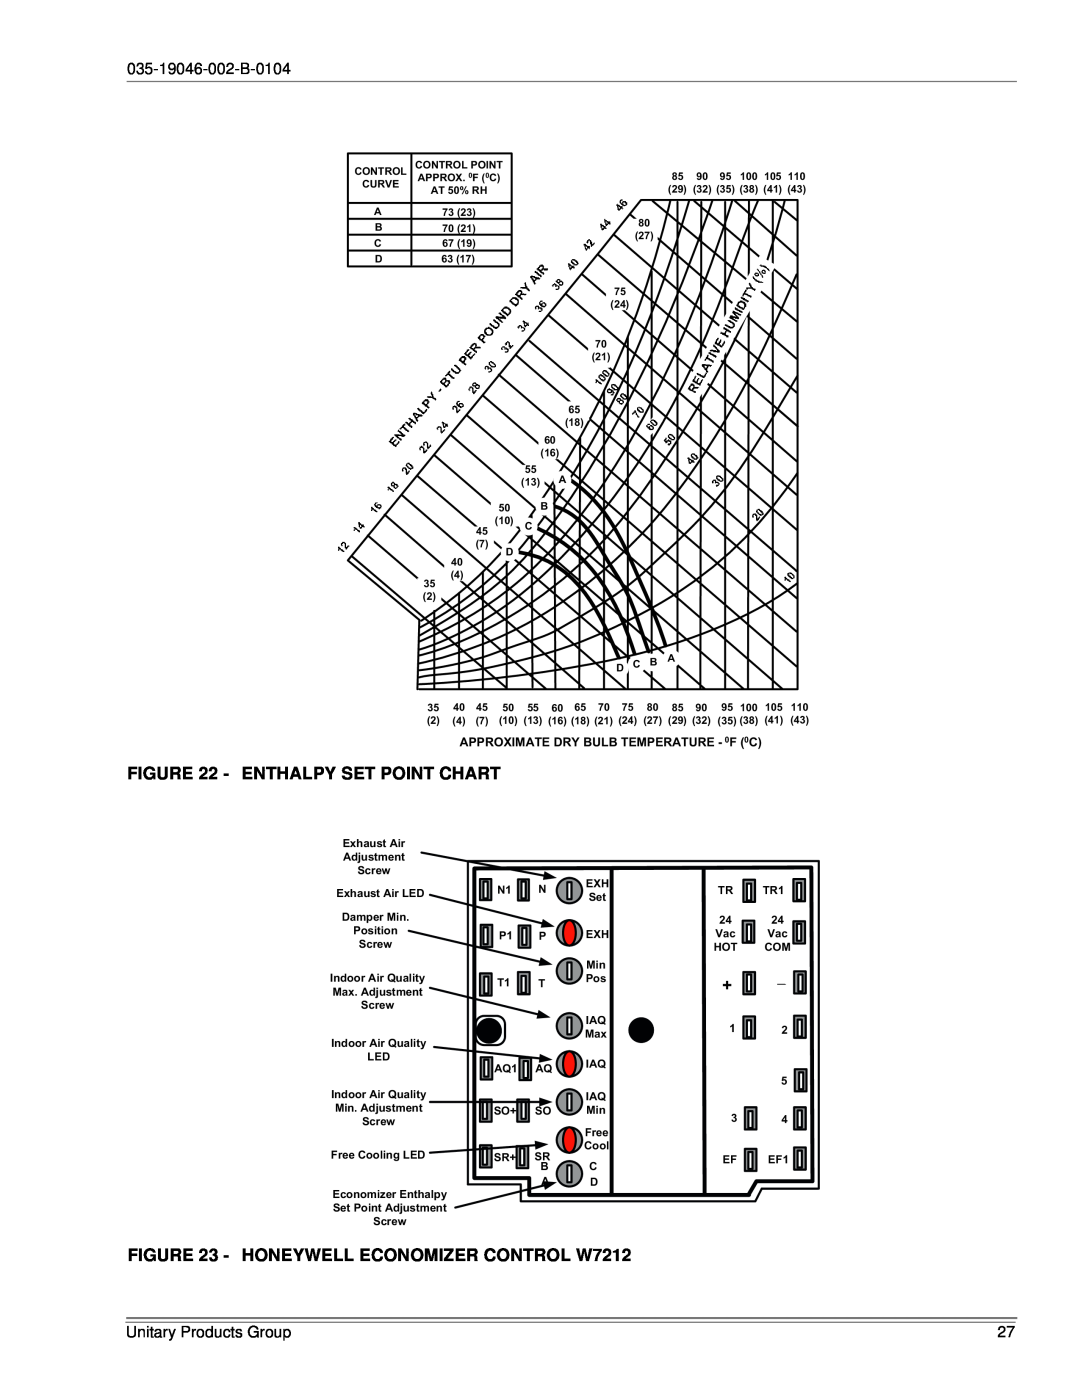 York DJ150 installation manual Enthalpy Set Point Chart, HONEYWELL ECONOMIZER CONTROL W7212 